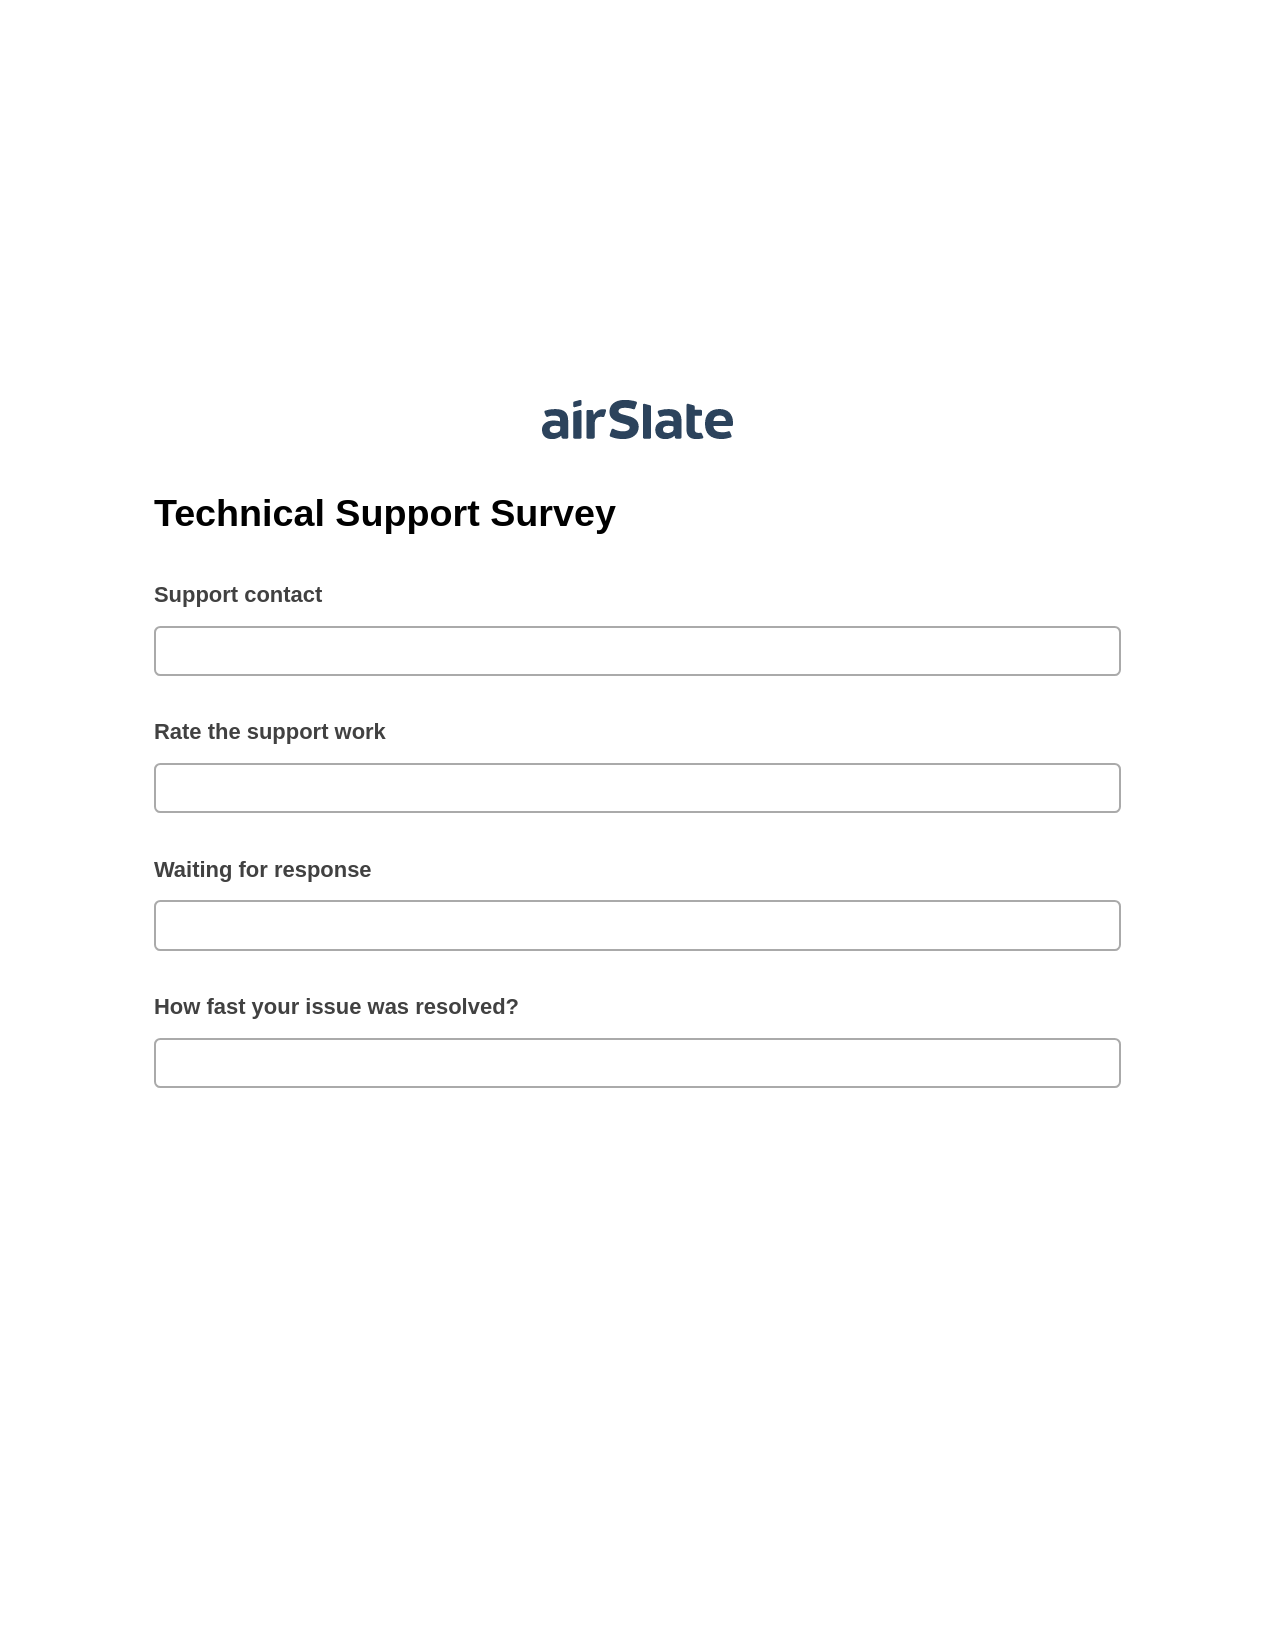 Technical Support Survey Pre-fill from CSV File Bot, Send Mailchimp Campaign Bot, Slack Notification Postfinish Bot